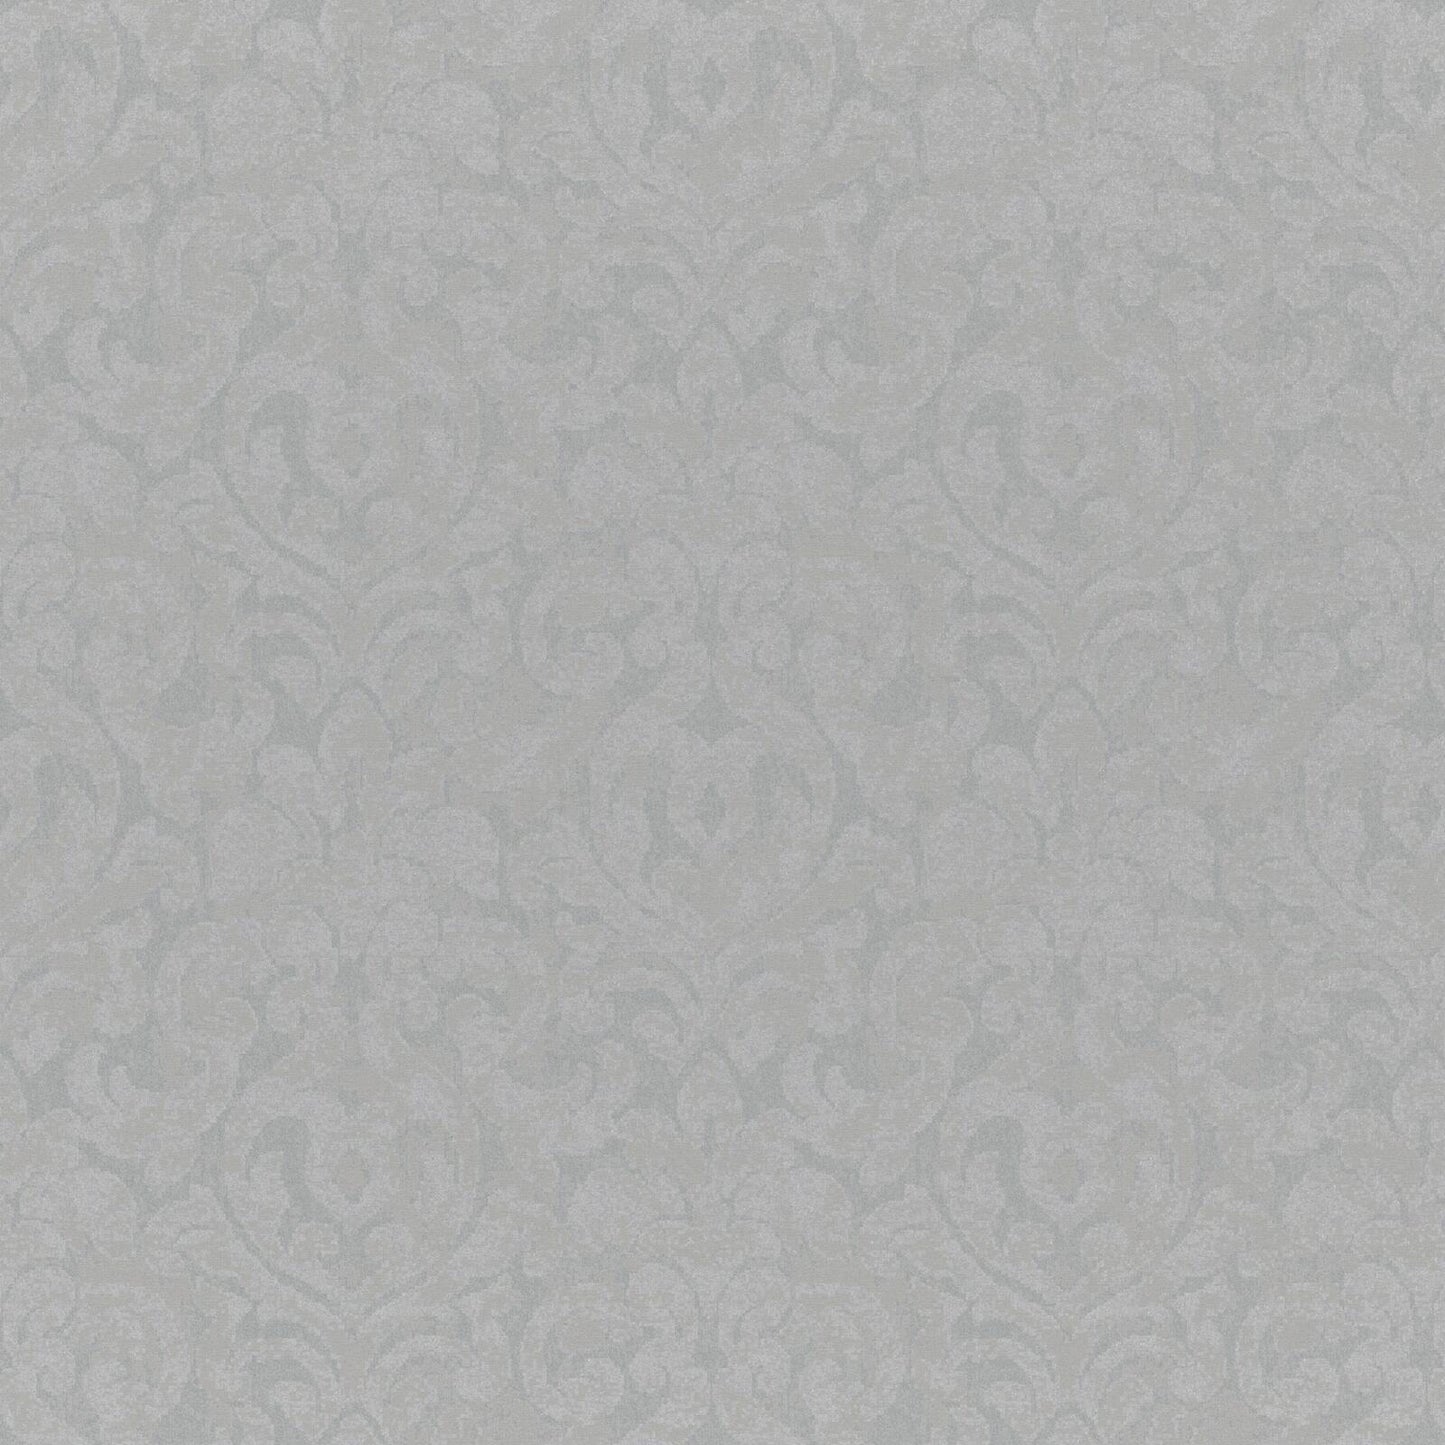 Purchase Maxwell Fabric - Nederlander, # 604 Silver